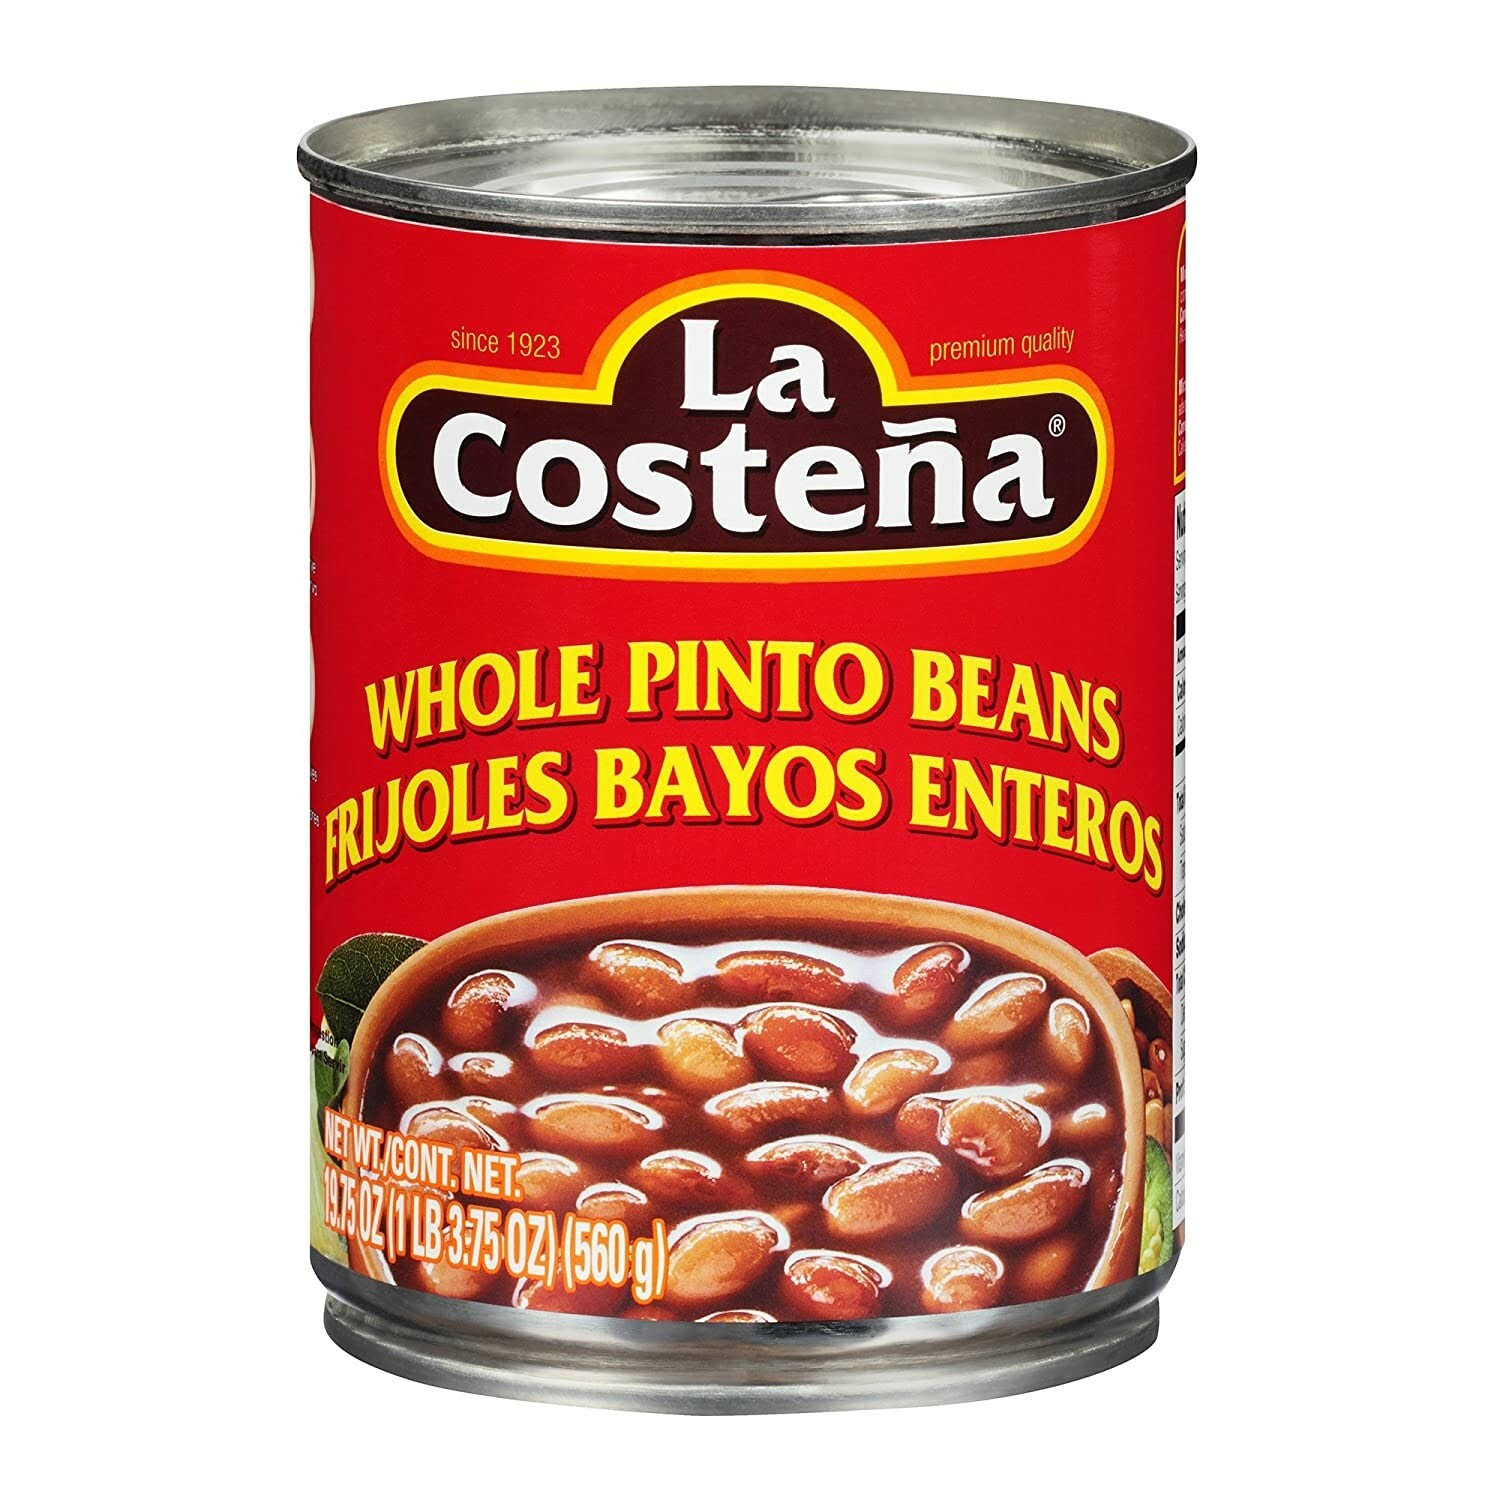 La Costena Whole Pinto Beans - 19.75 oz can